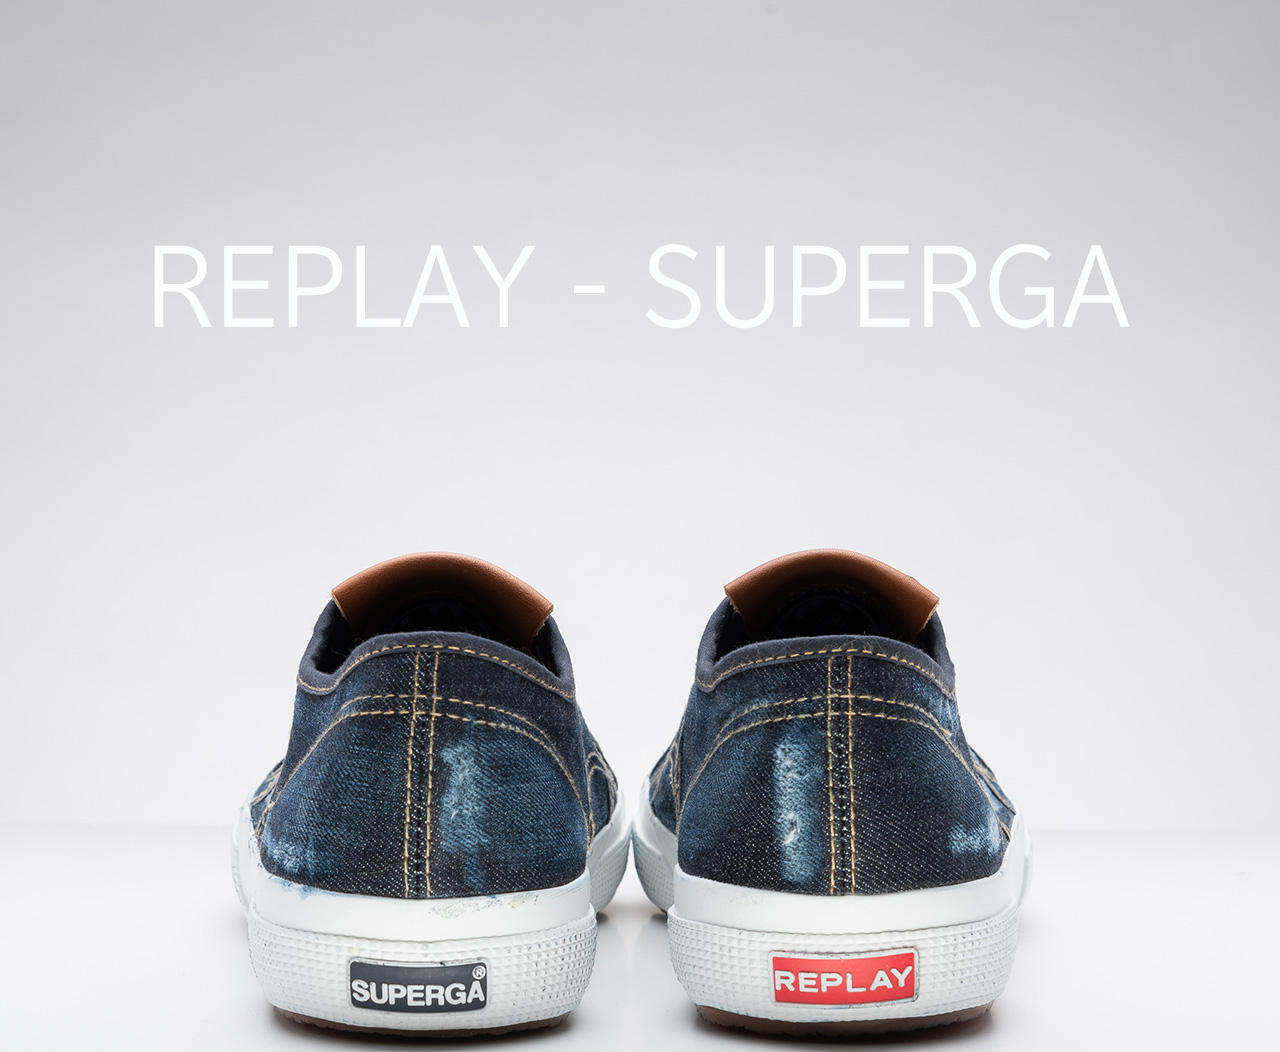 REPLAY-SUPERGA